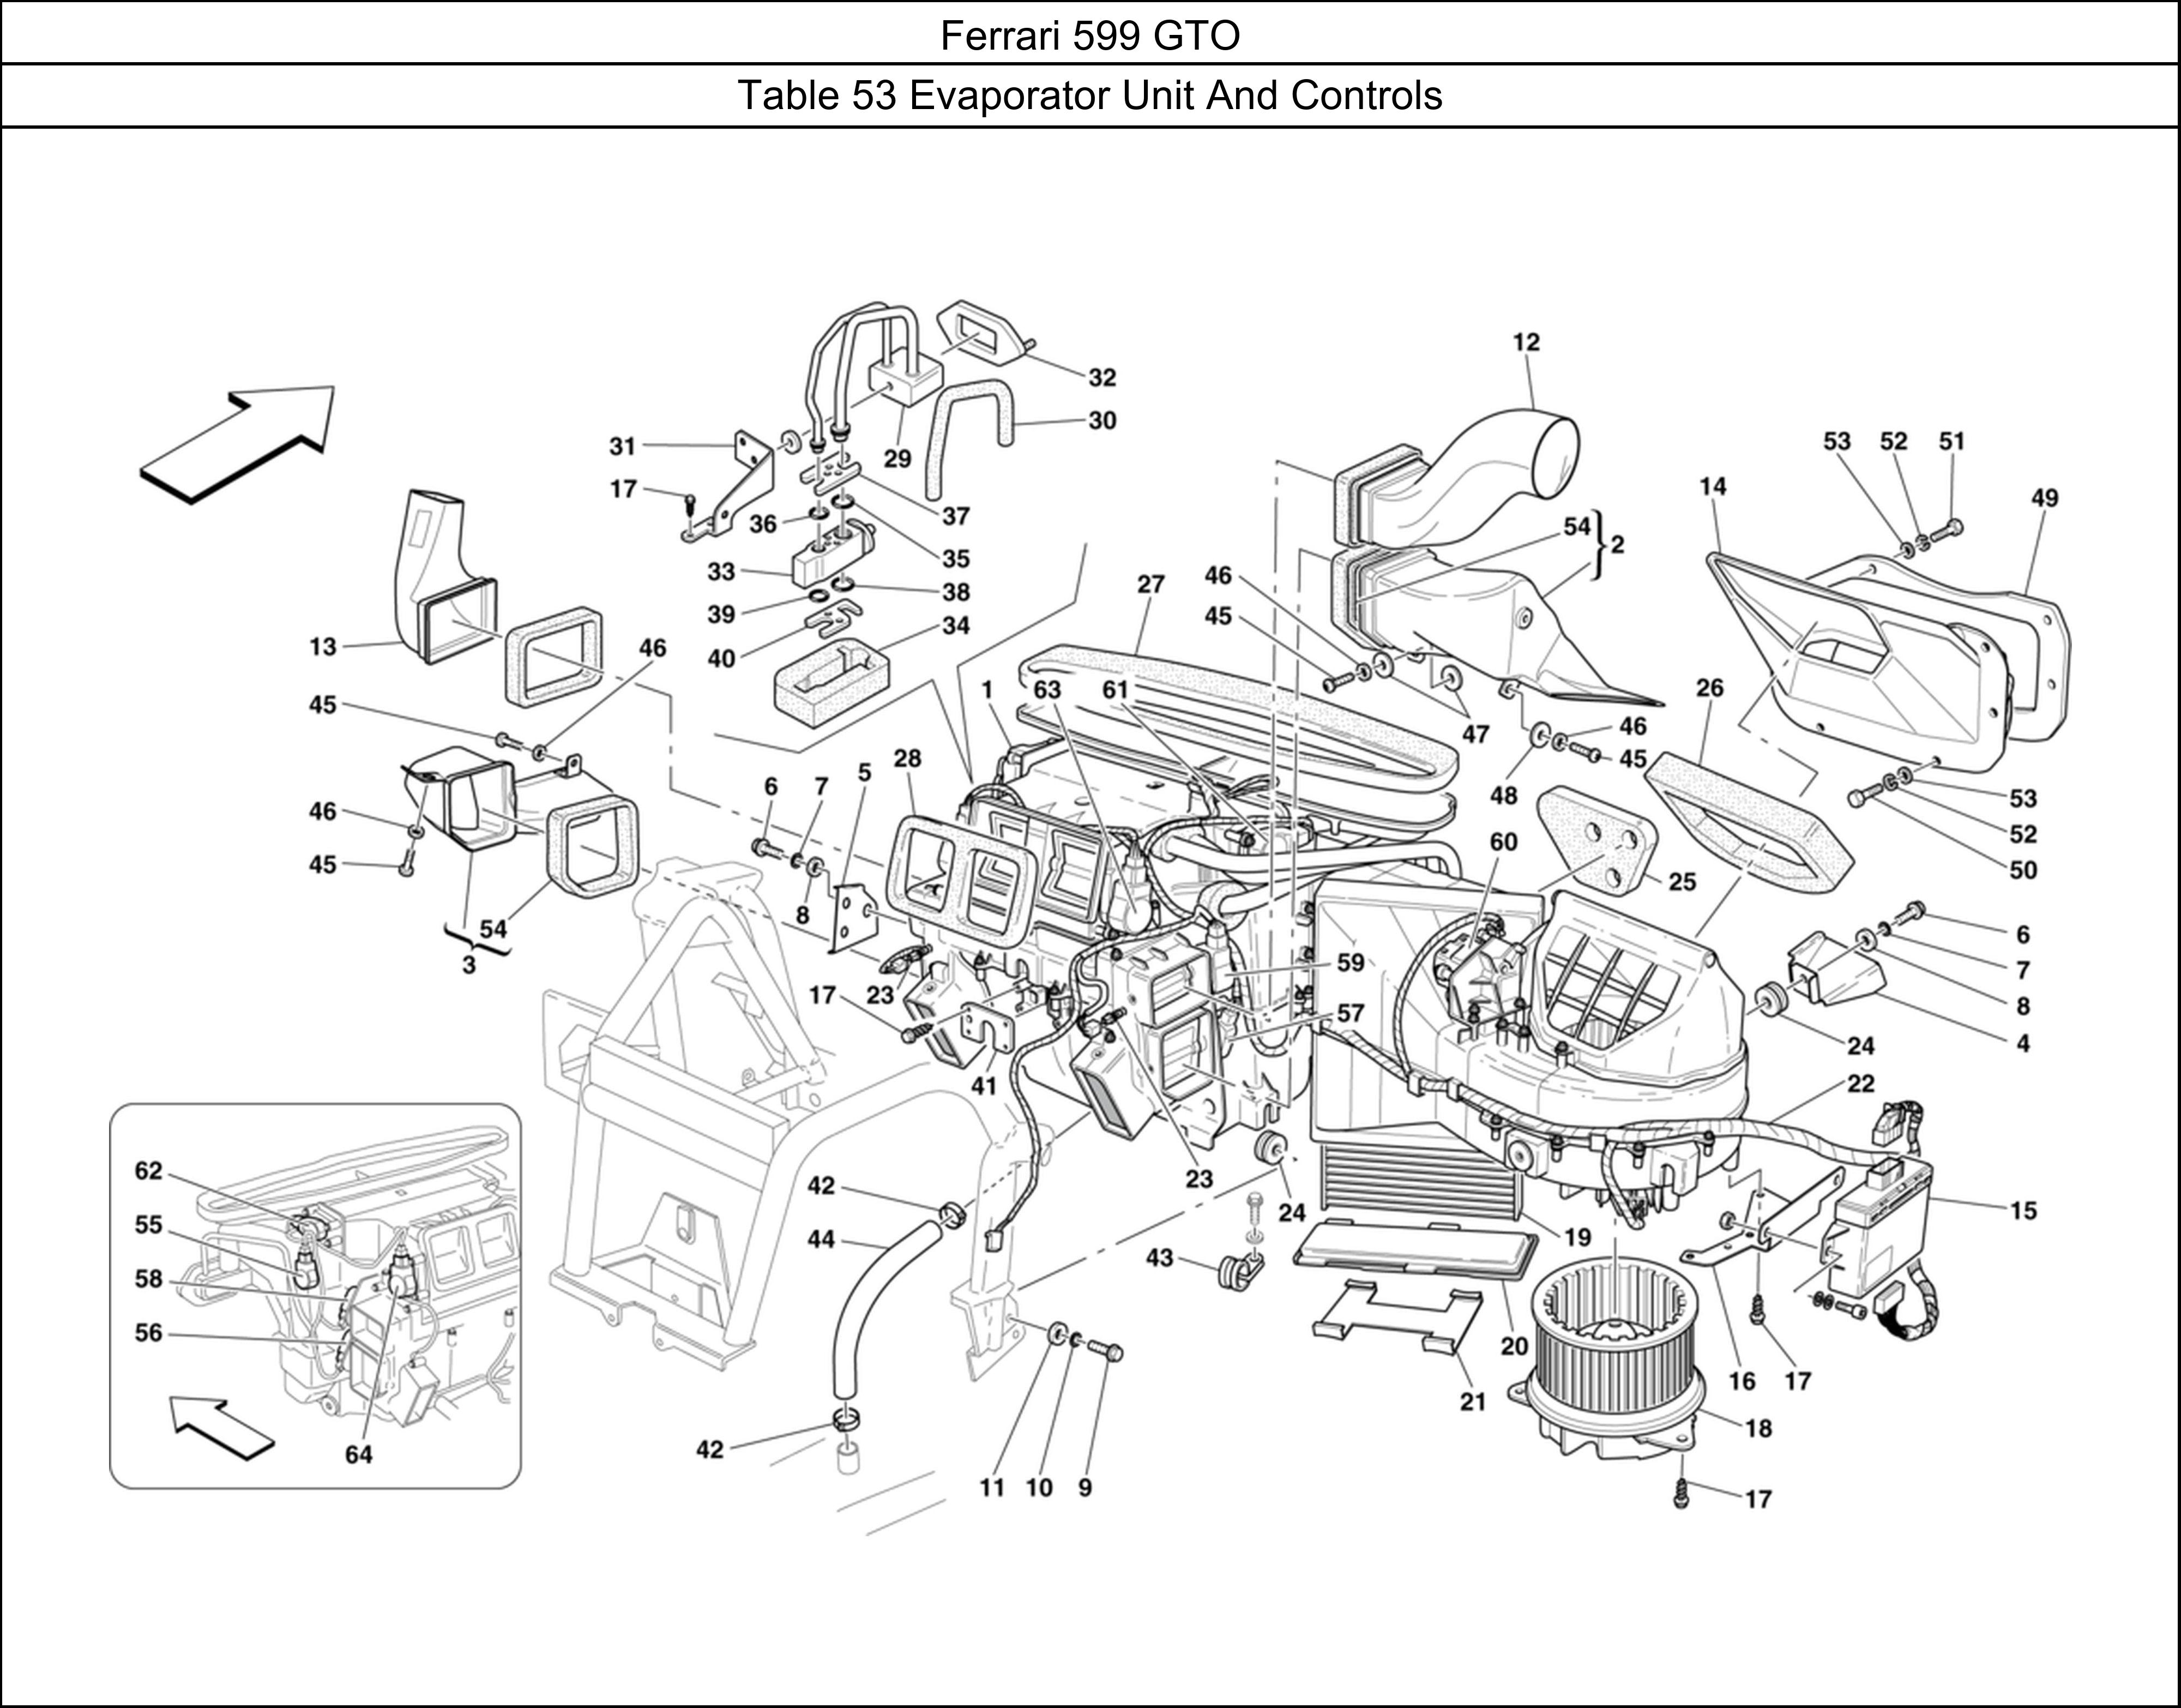 Ferrari Parts Ferrari 599 GTO Table 53 Evaporator Unit And Controls